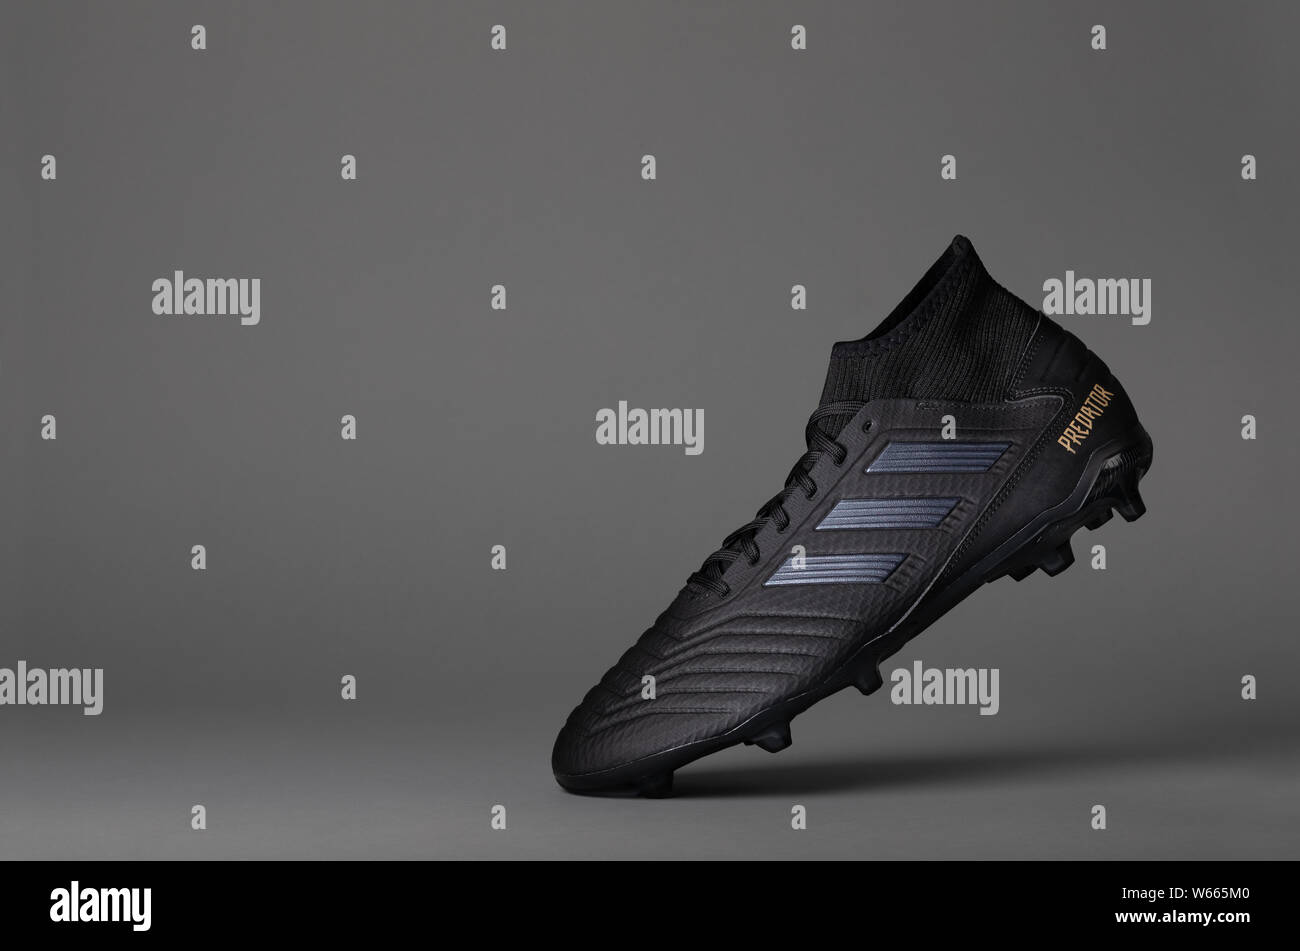 Adidas predator hi-res stock photography and images - Alamy